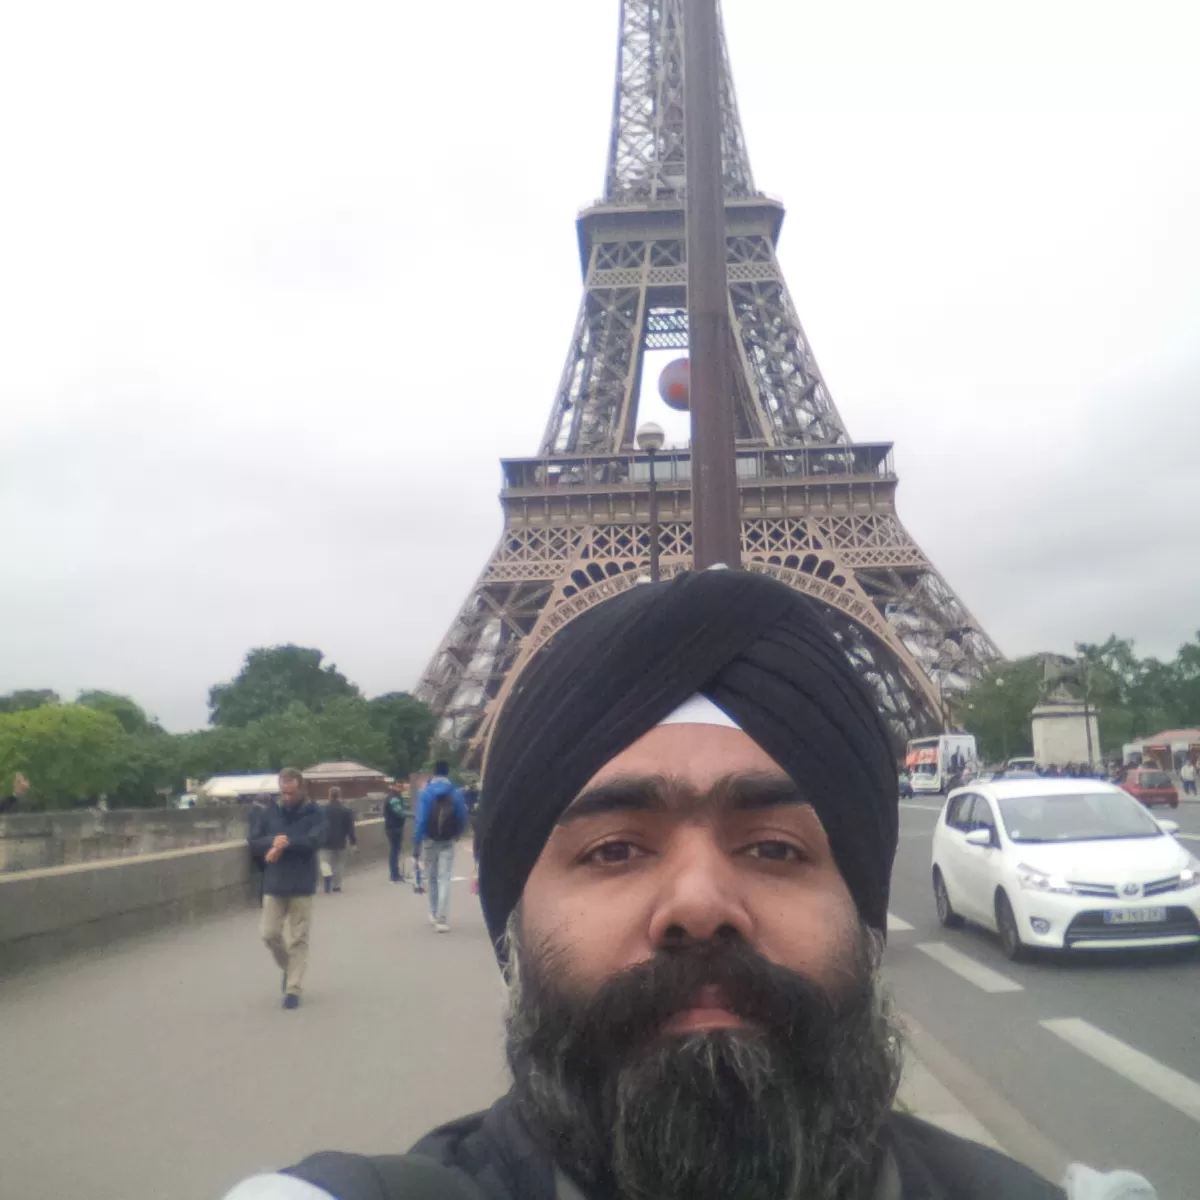 Photo of Eiffel Tower By Charandeep Singh